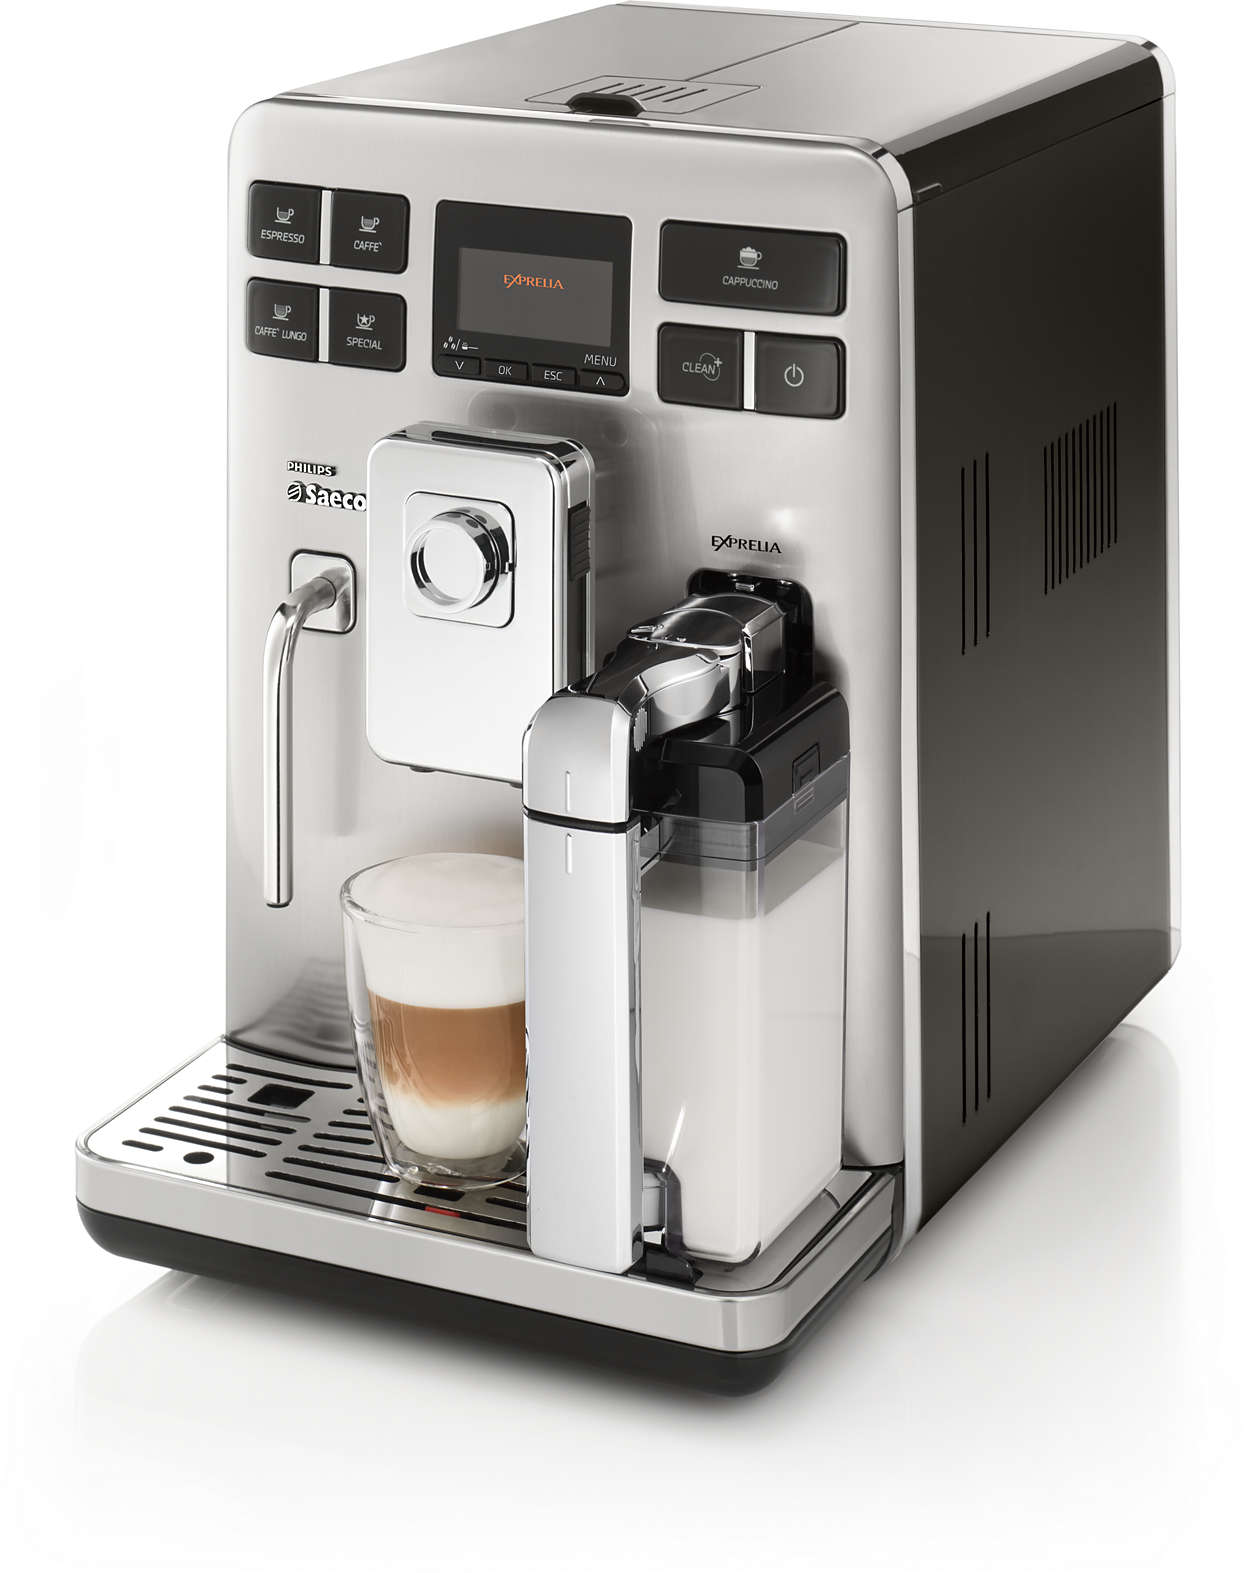 Espresso and cappuccino at a single touch